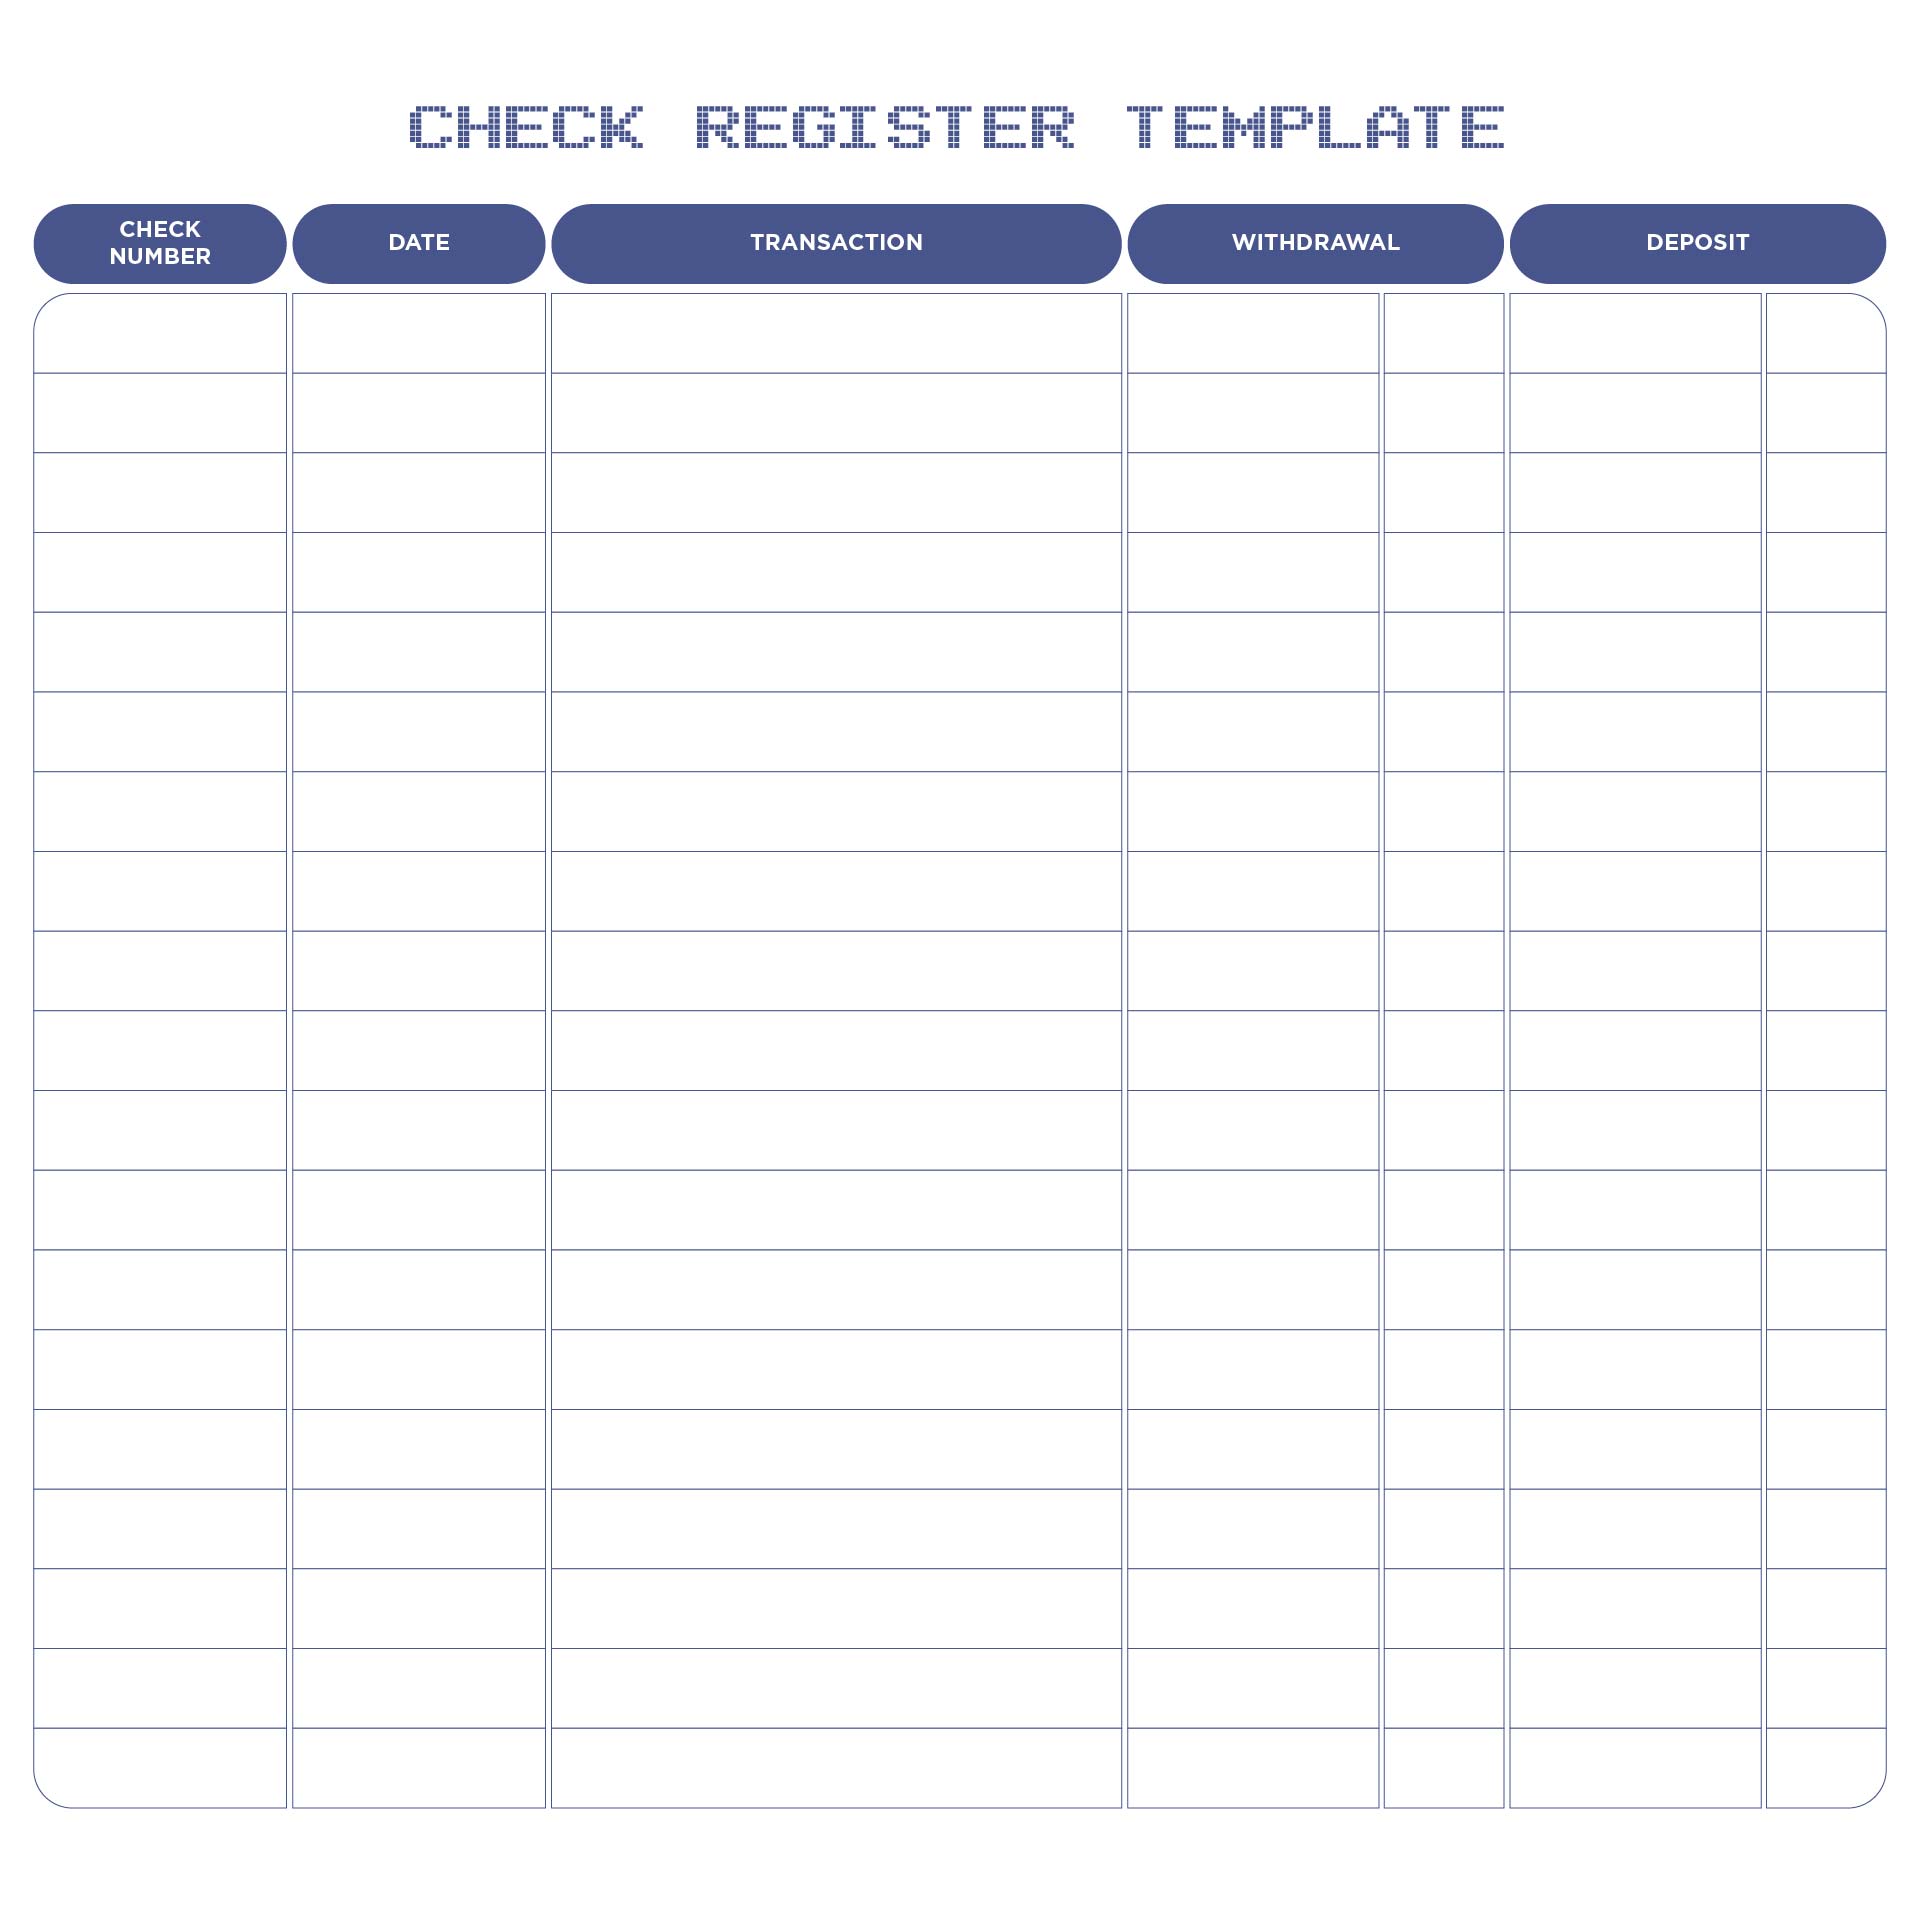 checkbook register printable for students